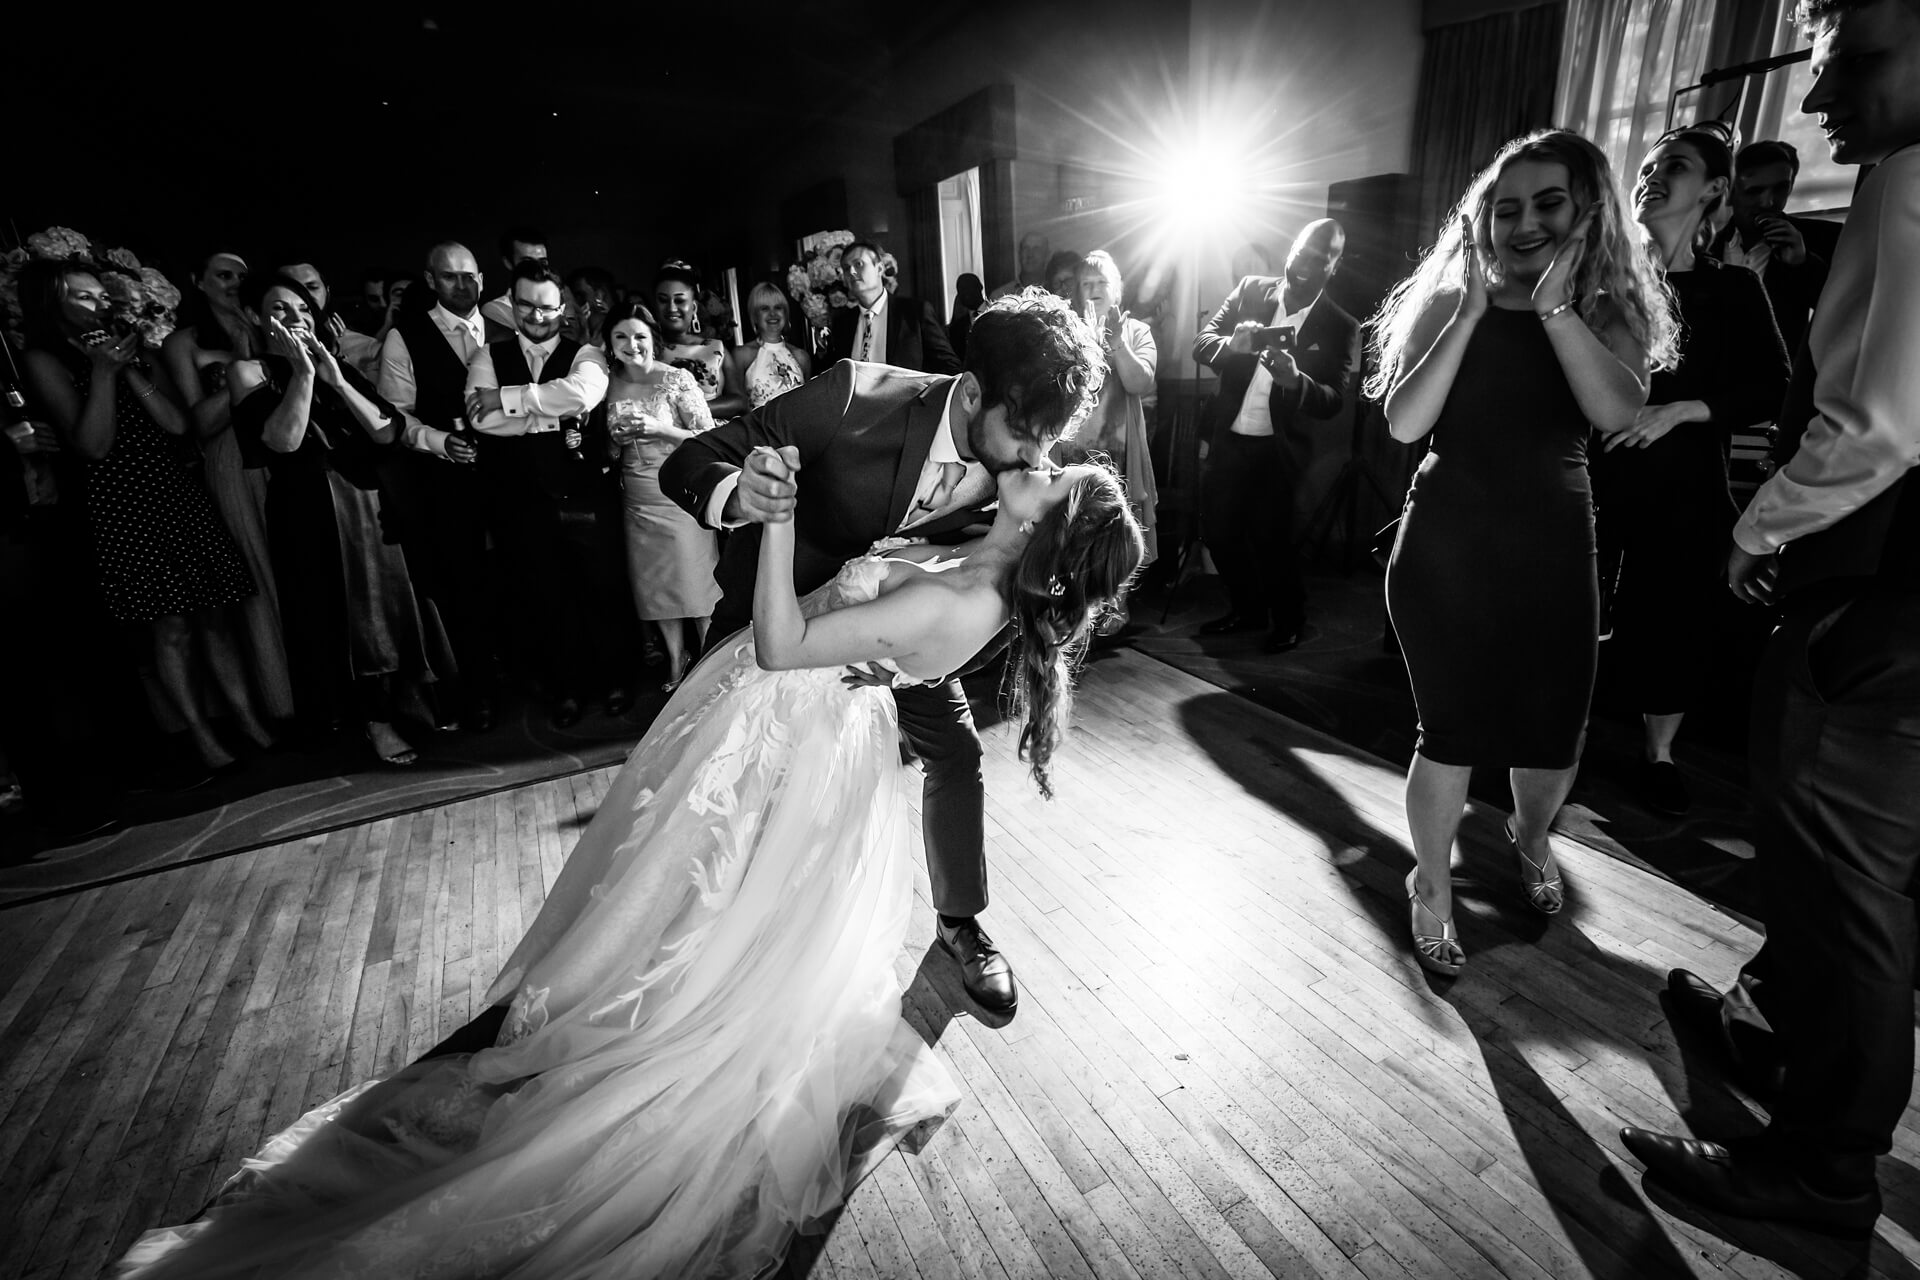 Groom kisses the bride on the dance floor